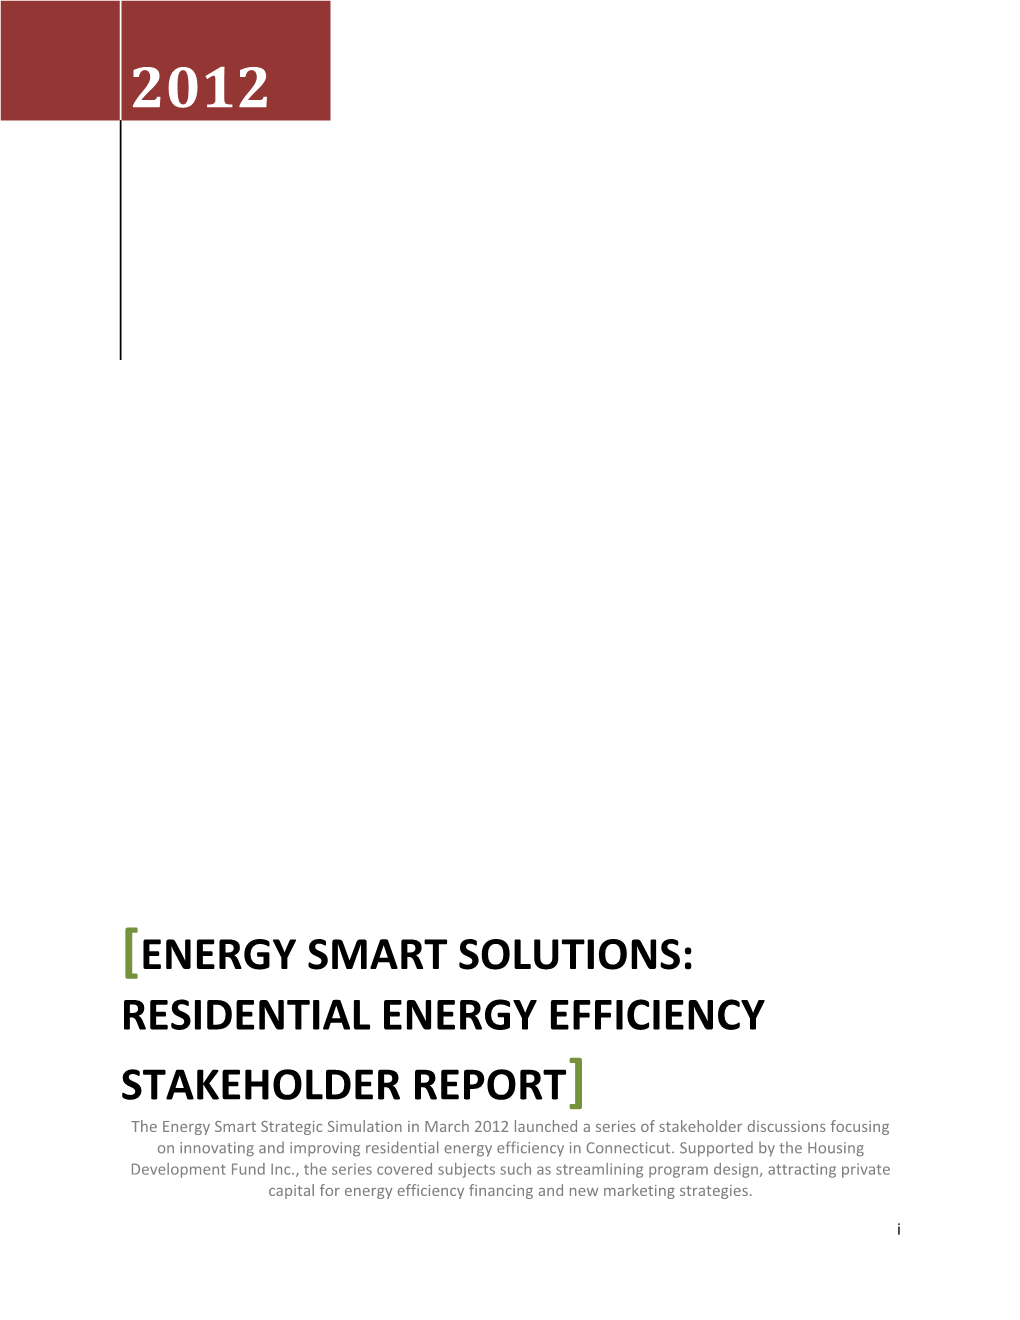 Energy Smart SOLUTIONS: Residential Energy Efficiency Stakeholder Report